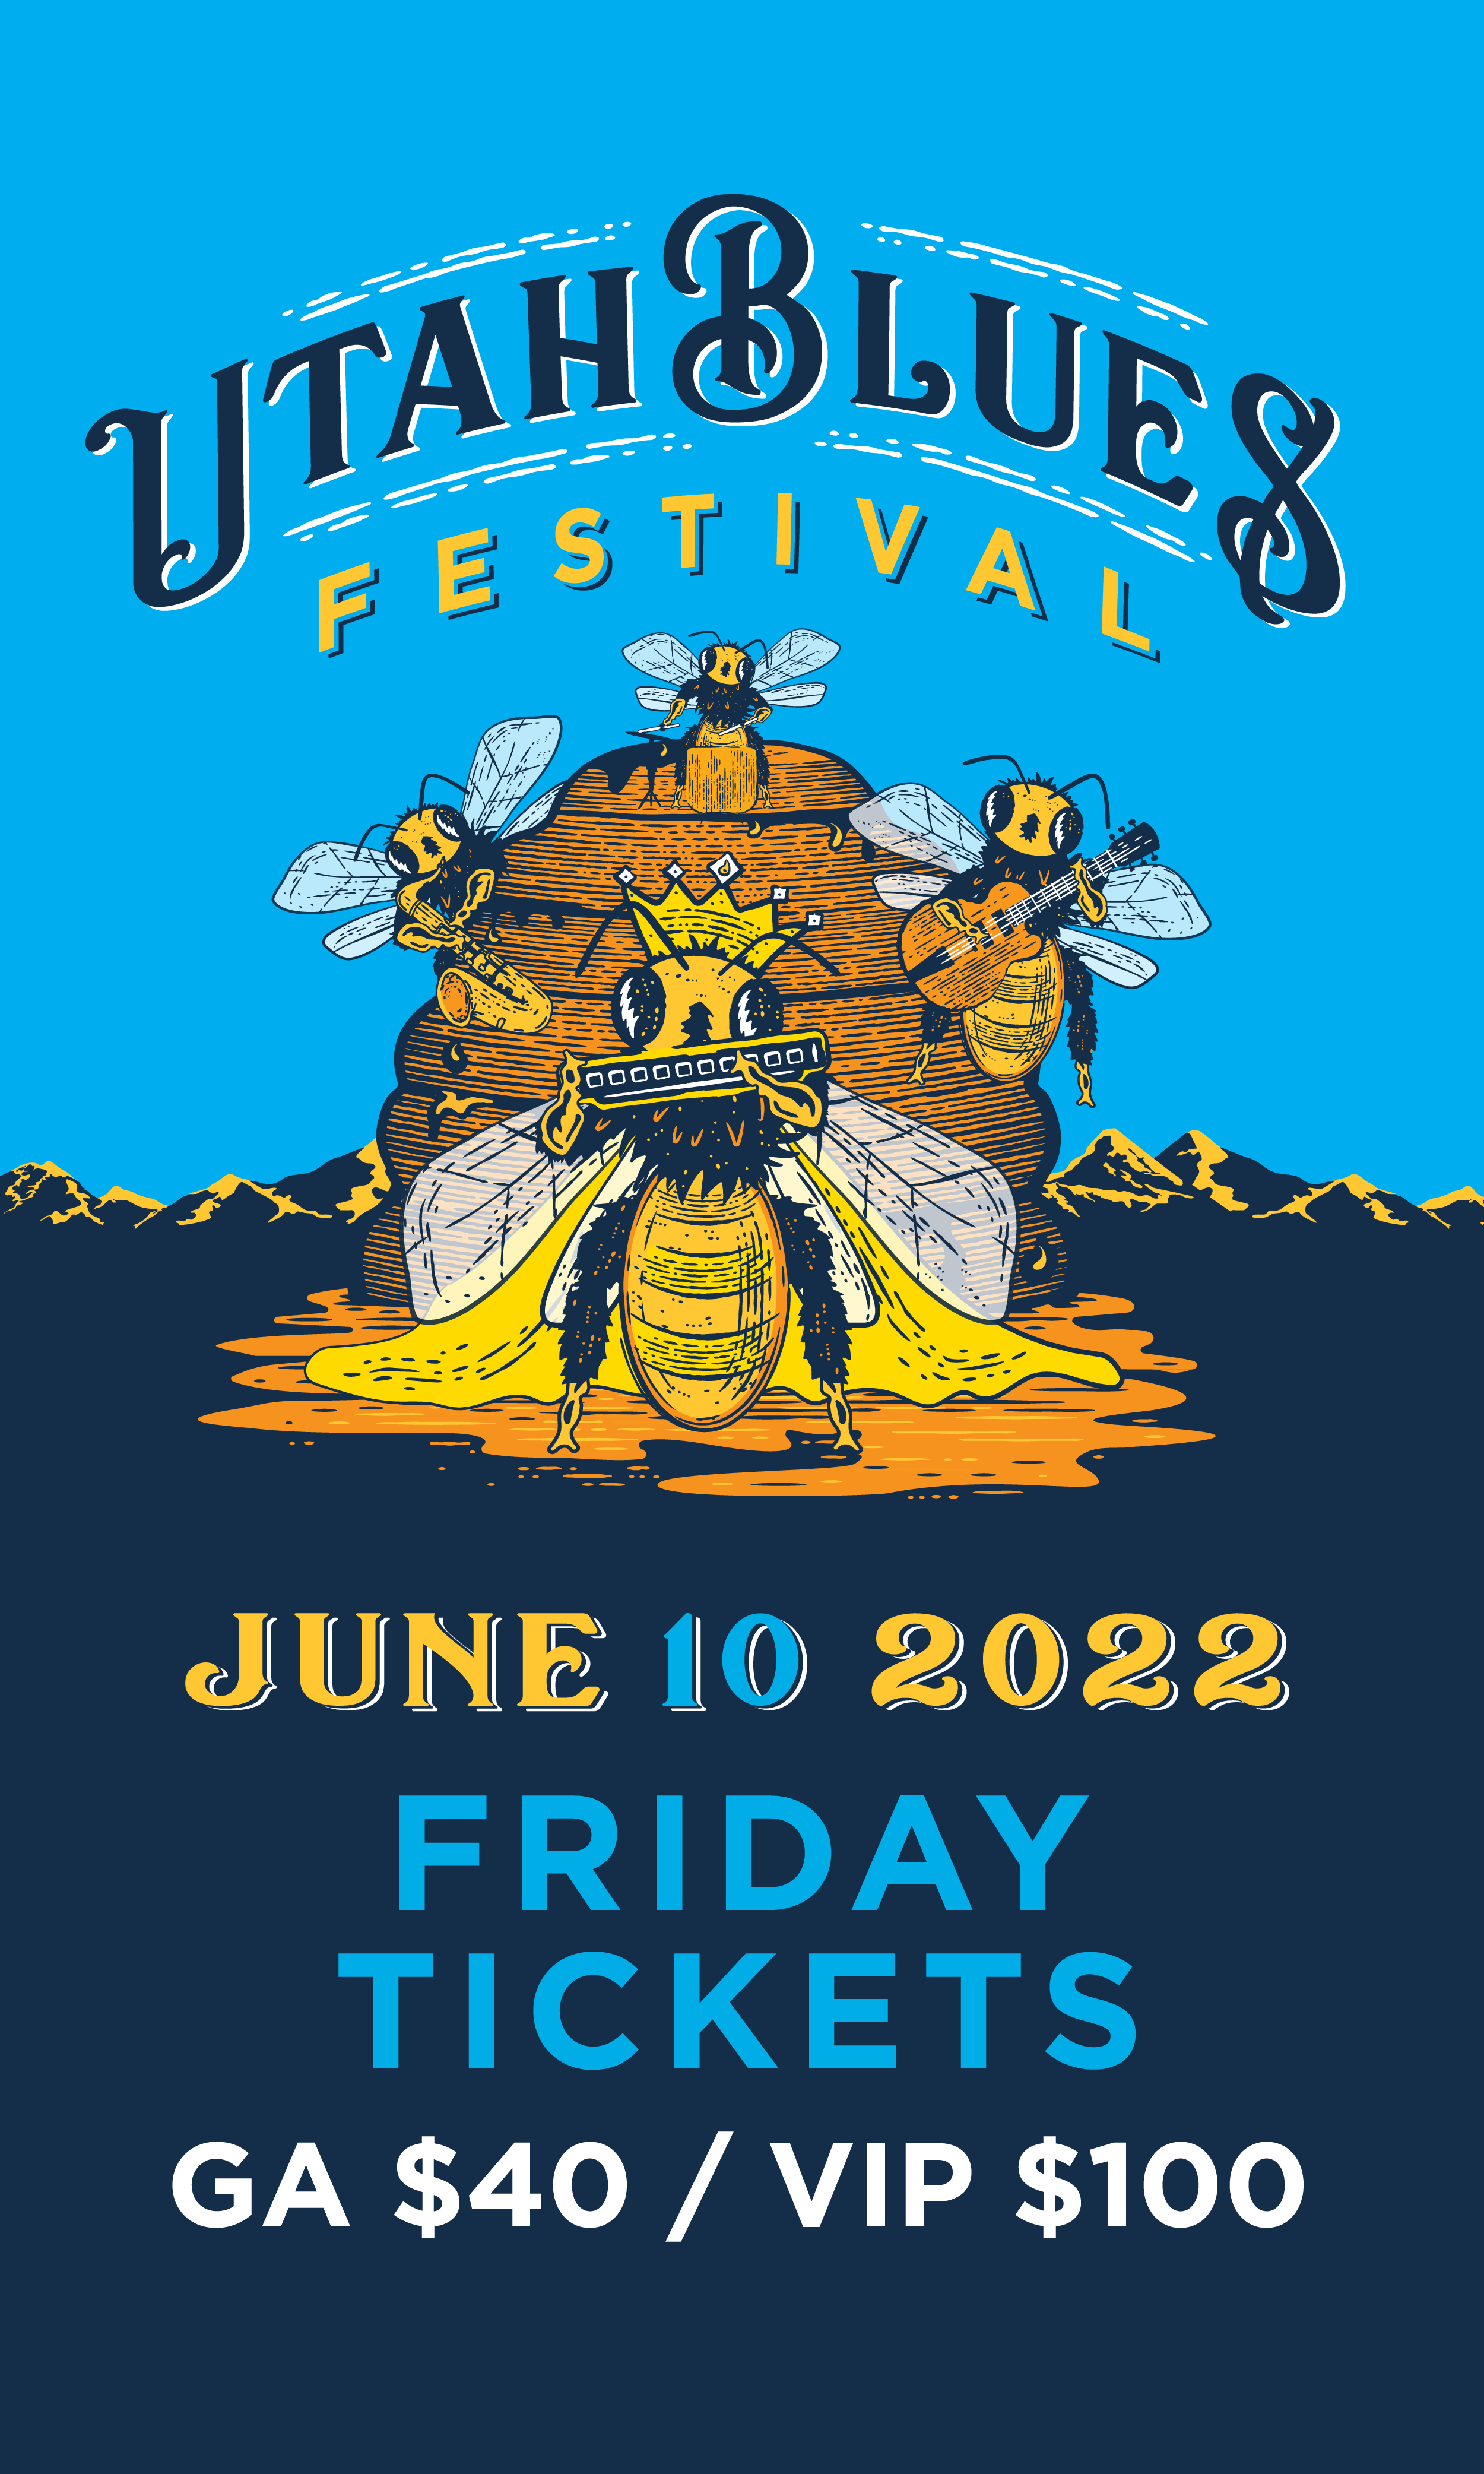 Utah Blues Festival 2022 Friday June 10 & Saturday June 11, 2022